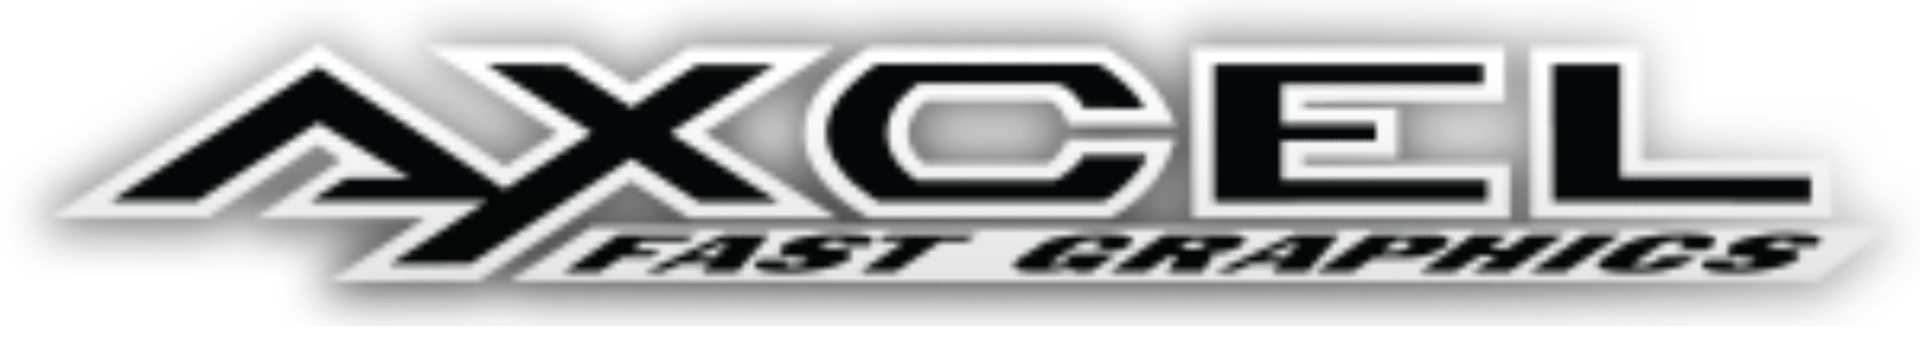 Axcel Fast Graphics Logo